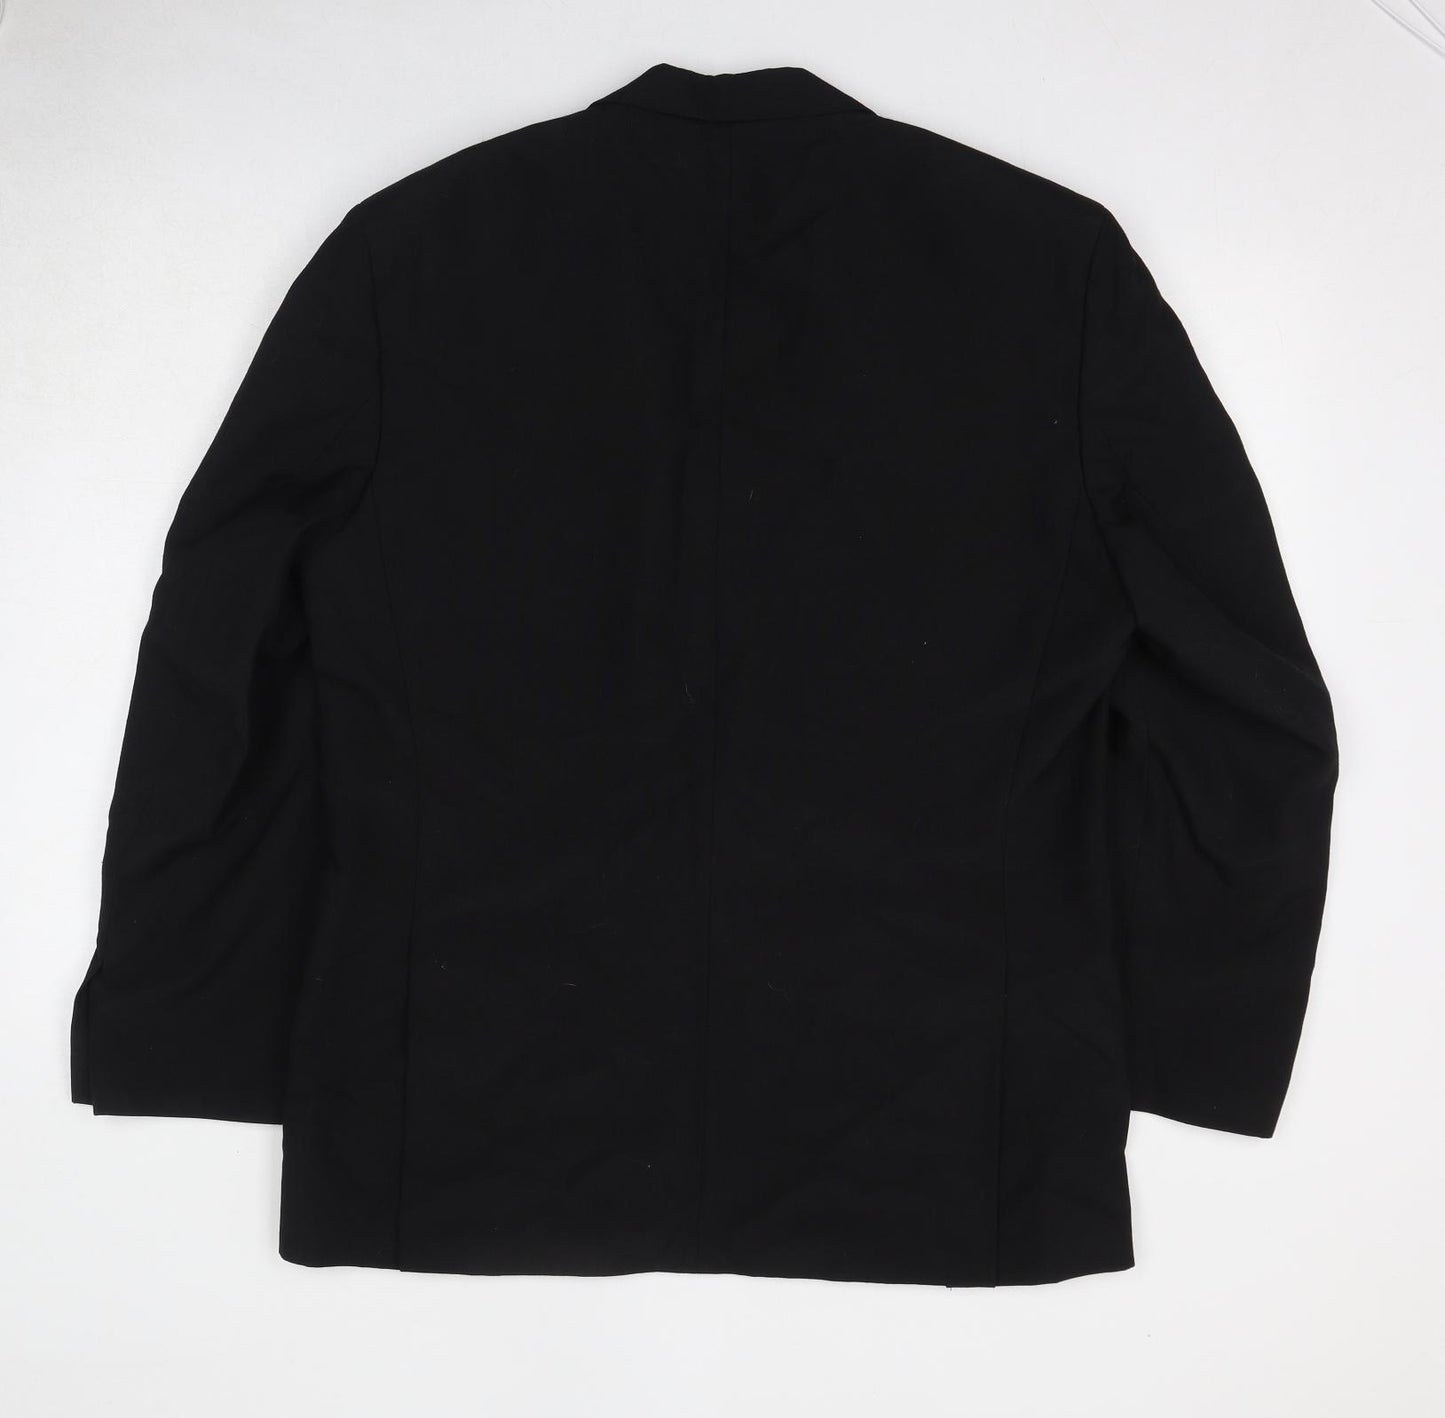 Burton Mens Black Polyester Jacket Suit Jacket Size 42 Regular